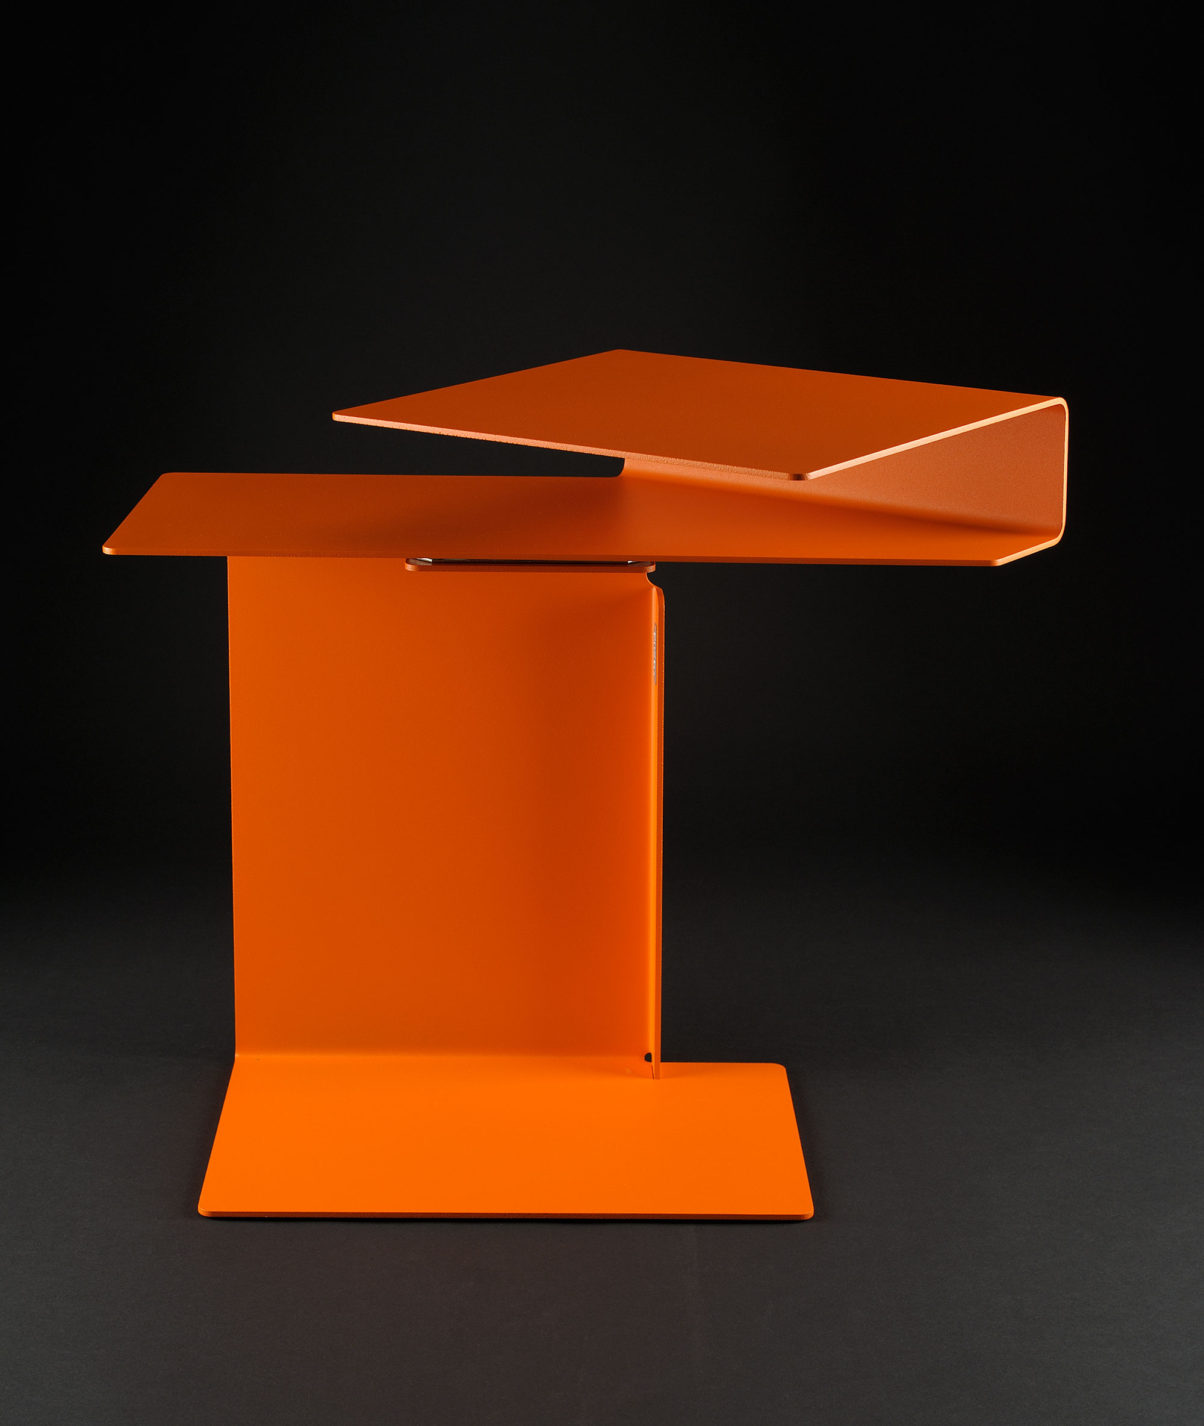 Small table made of bent orange sheet metal.